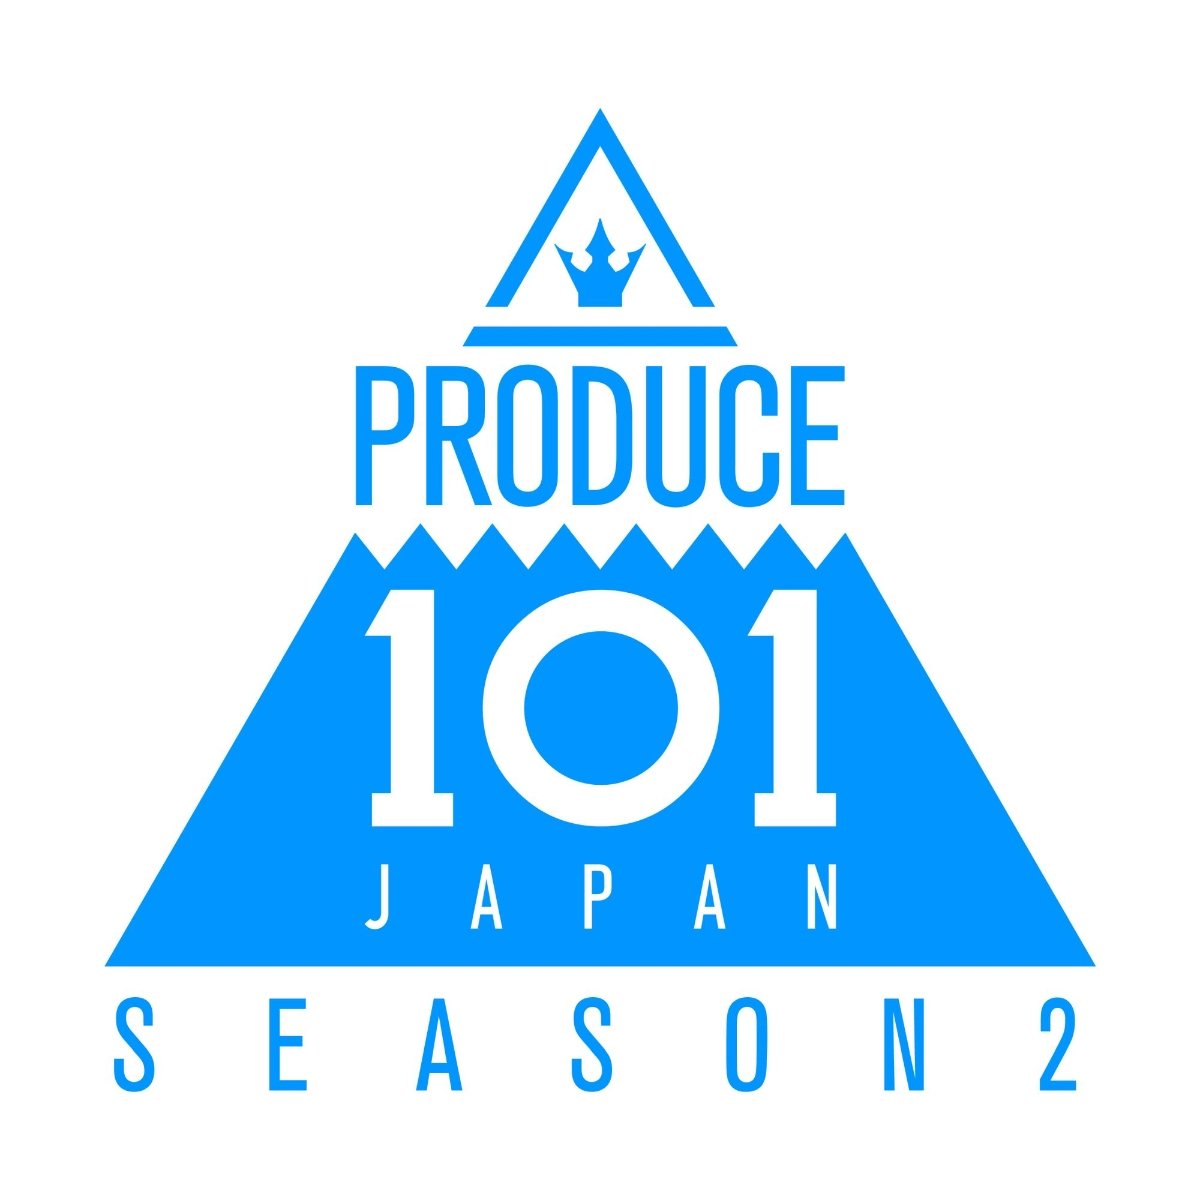 CD Shop - PRODUCE 101 JAPAN SEASON PRODUCE 101 JAPAN SEASON 2